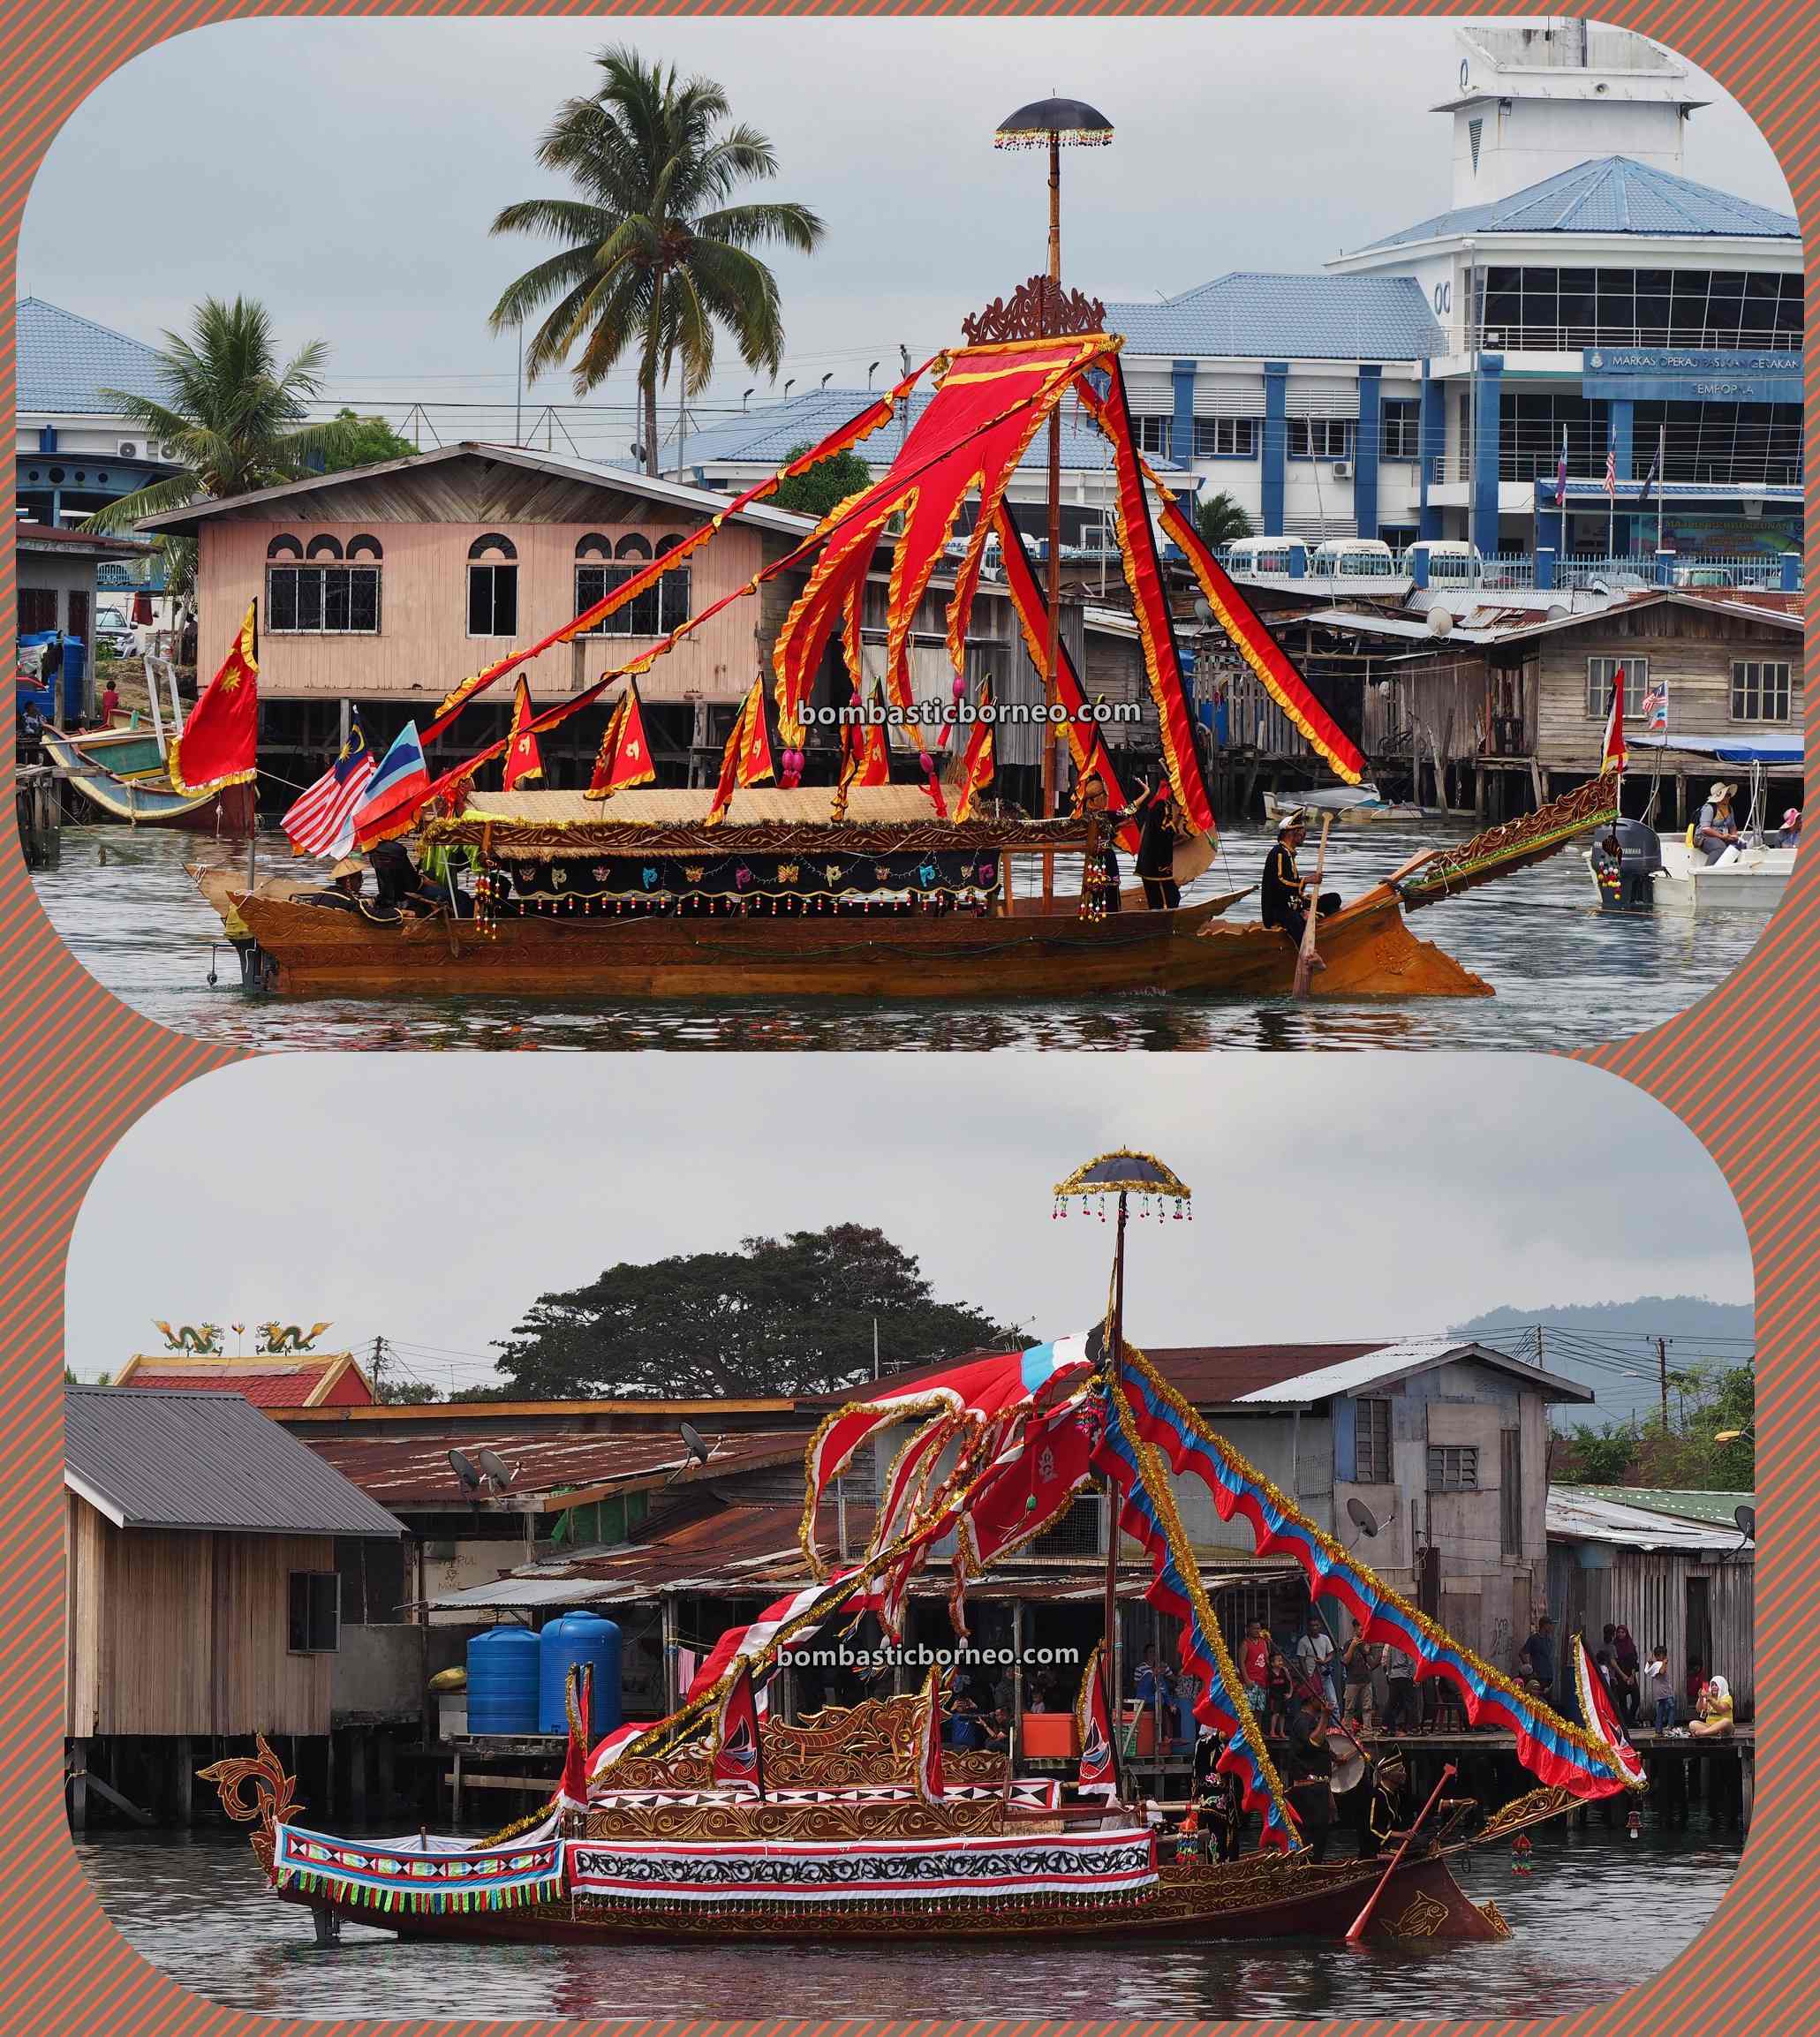 Water Festival, Pesta Regatta Lepa, Sailing Boat, Suku Bajau Laut, ethnic, budaya, traditional, event, Semporna, Sabah, Malaysia, Tourism, tourist attraction, travel guide, Trans Borneo,